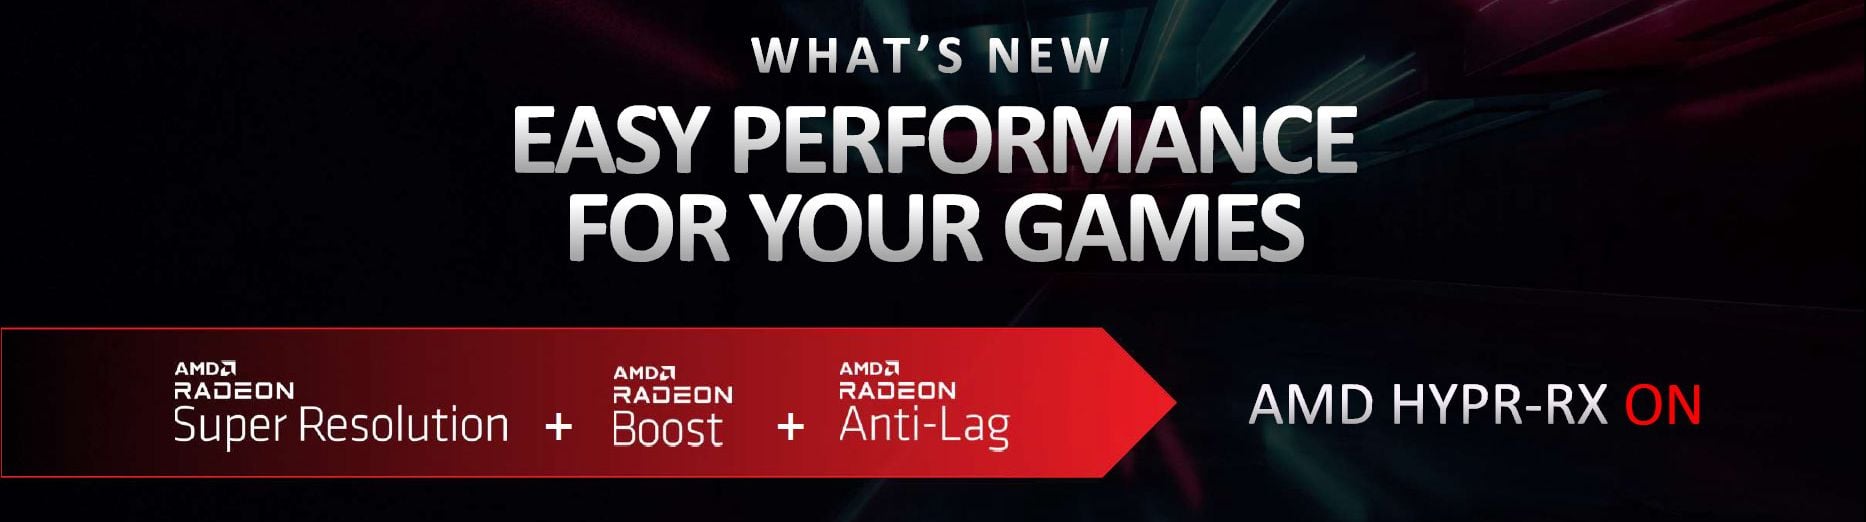 Tek Tiklamayla Performans Artisi AMD HYPR RX Teknolojisi Detaylaniyor3